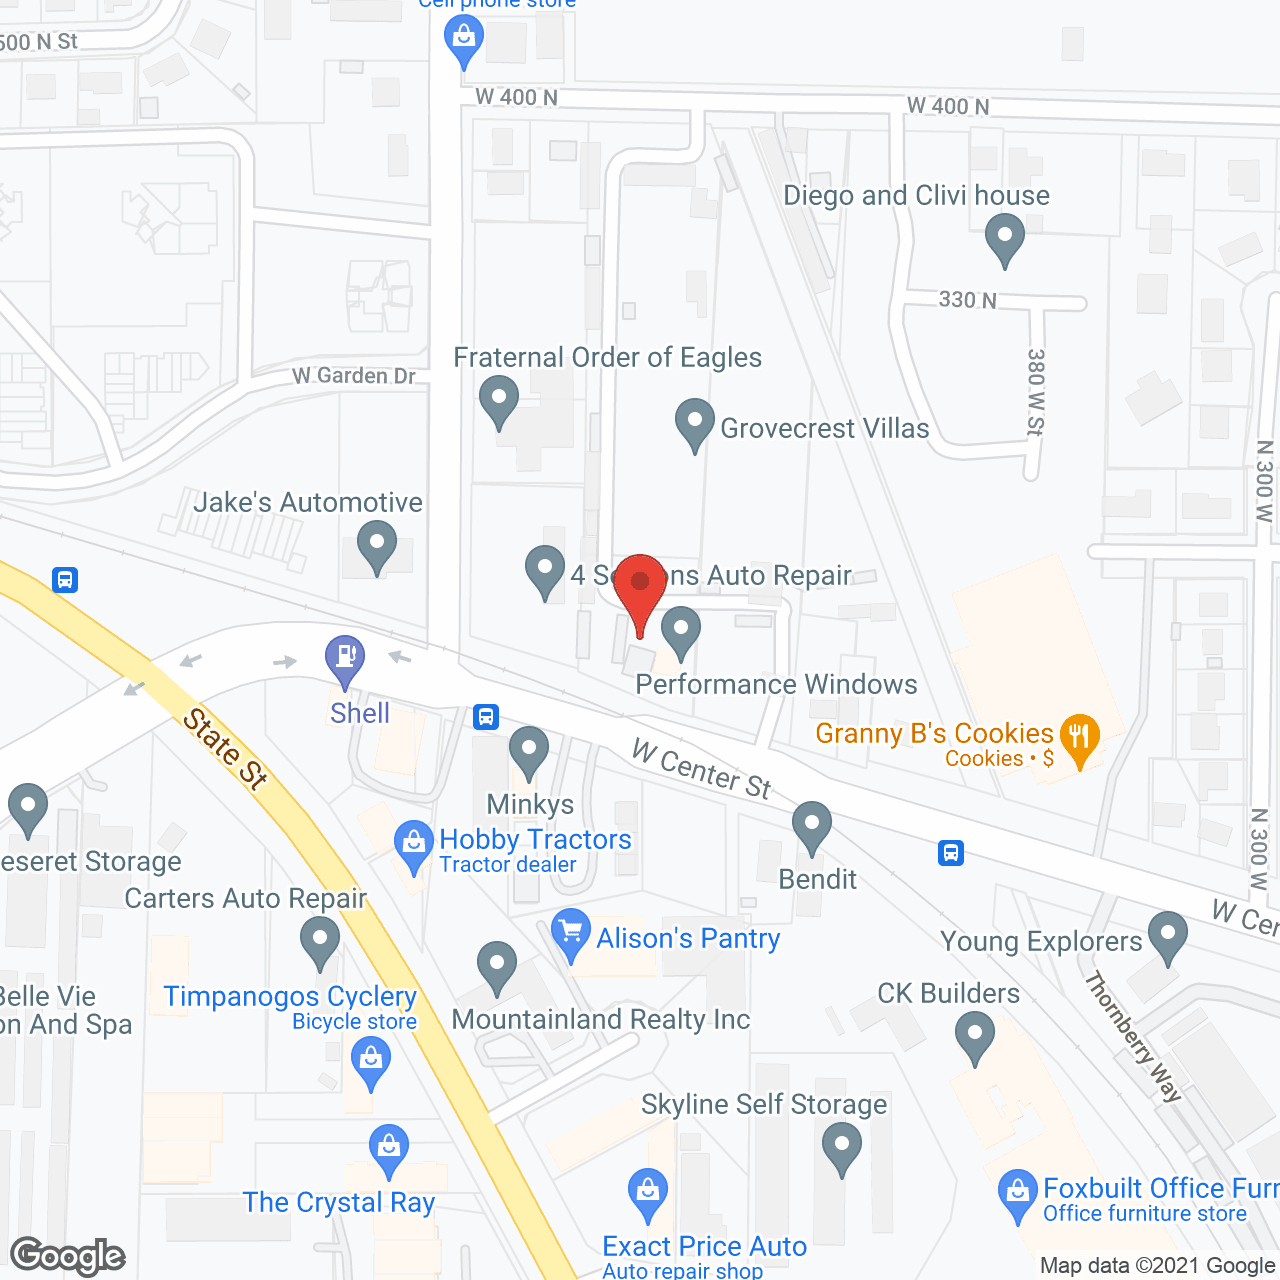 Grovecrest Villas in google map